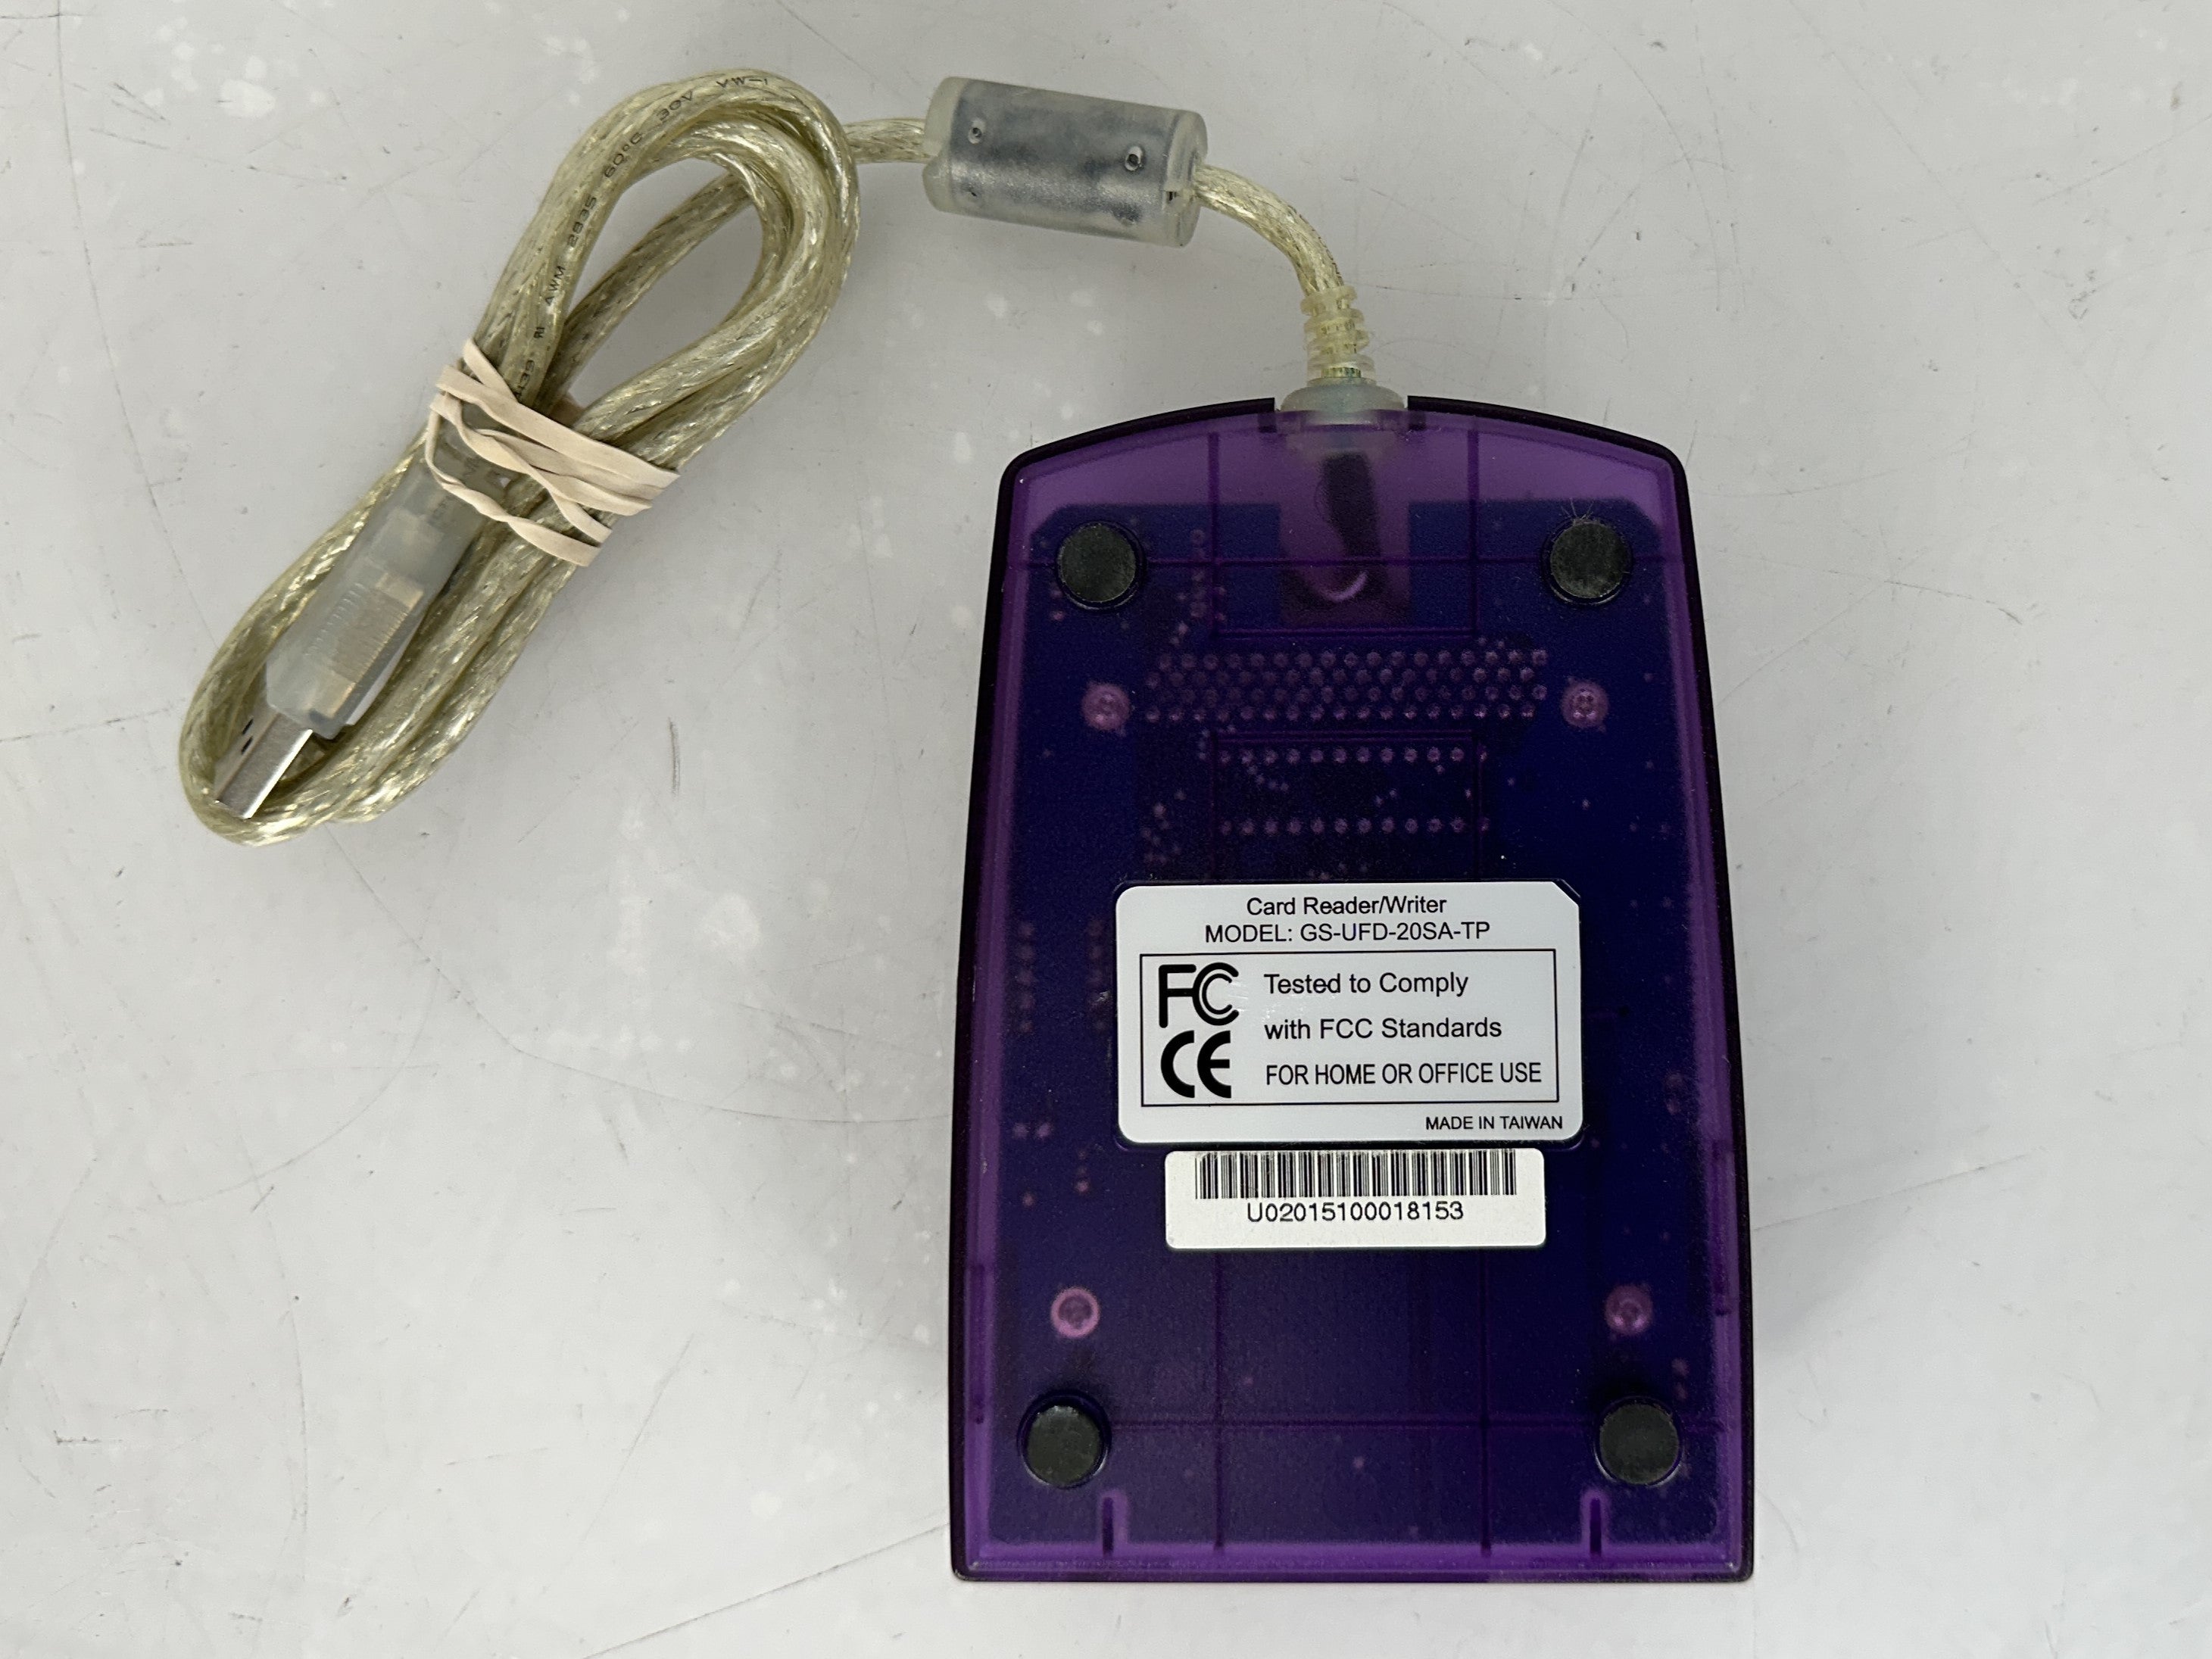 Lexar Media GS-UFD-20SA-TP USB Card Reader and Writer